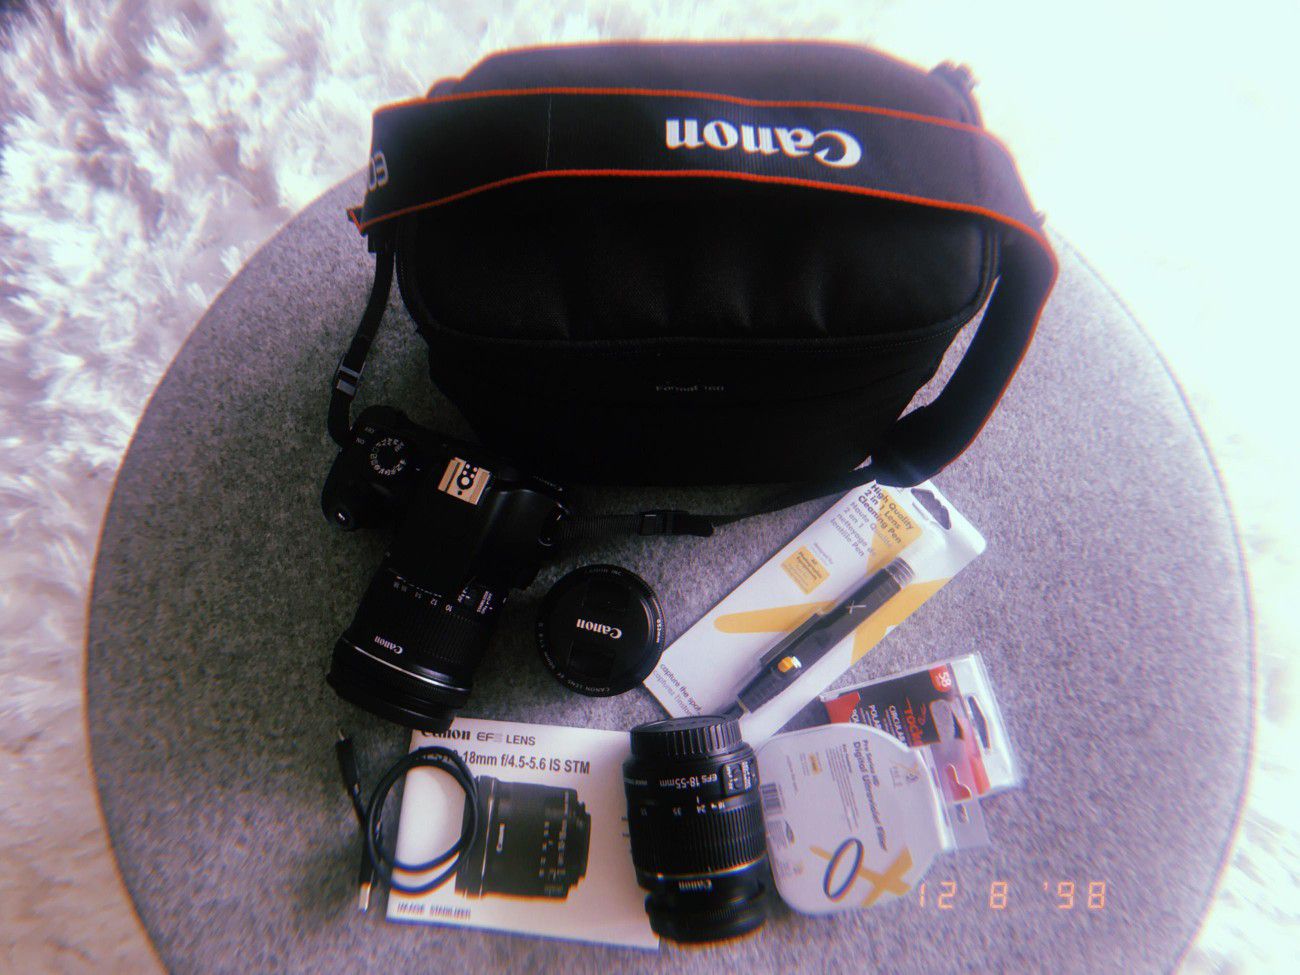 Photographer starter kit including camera and lenses